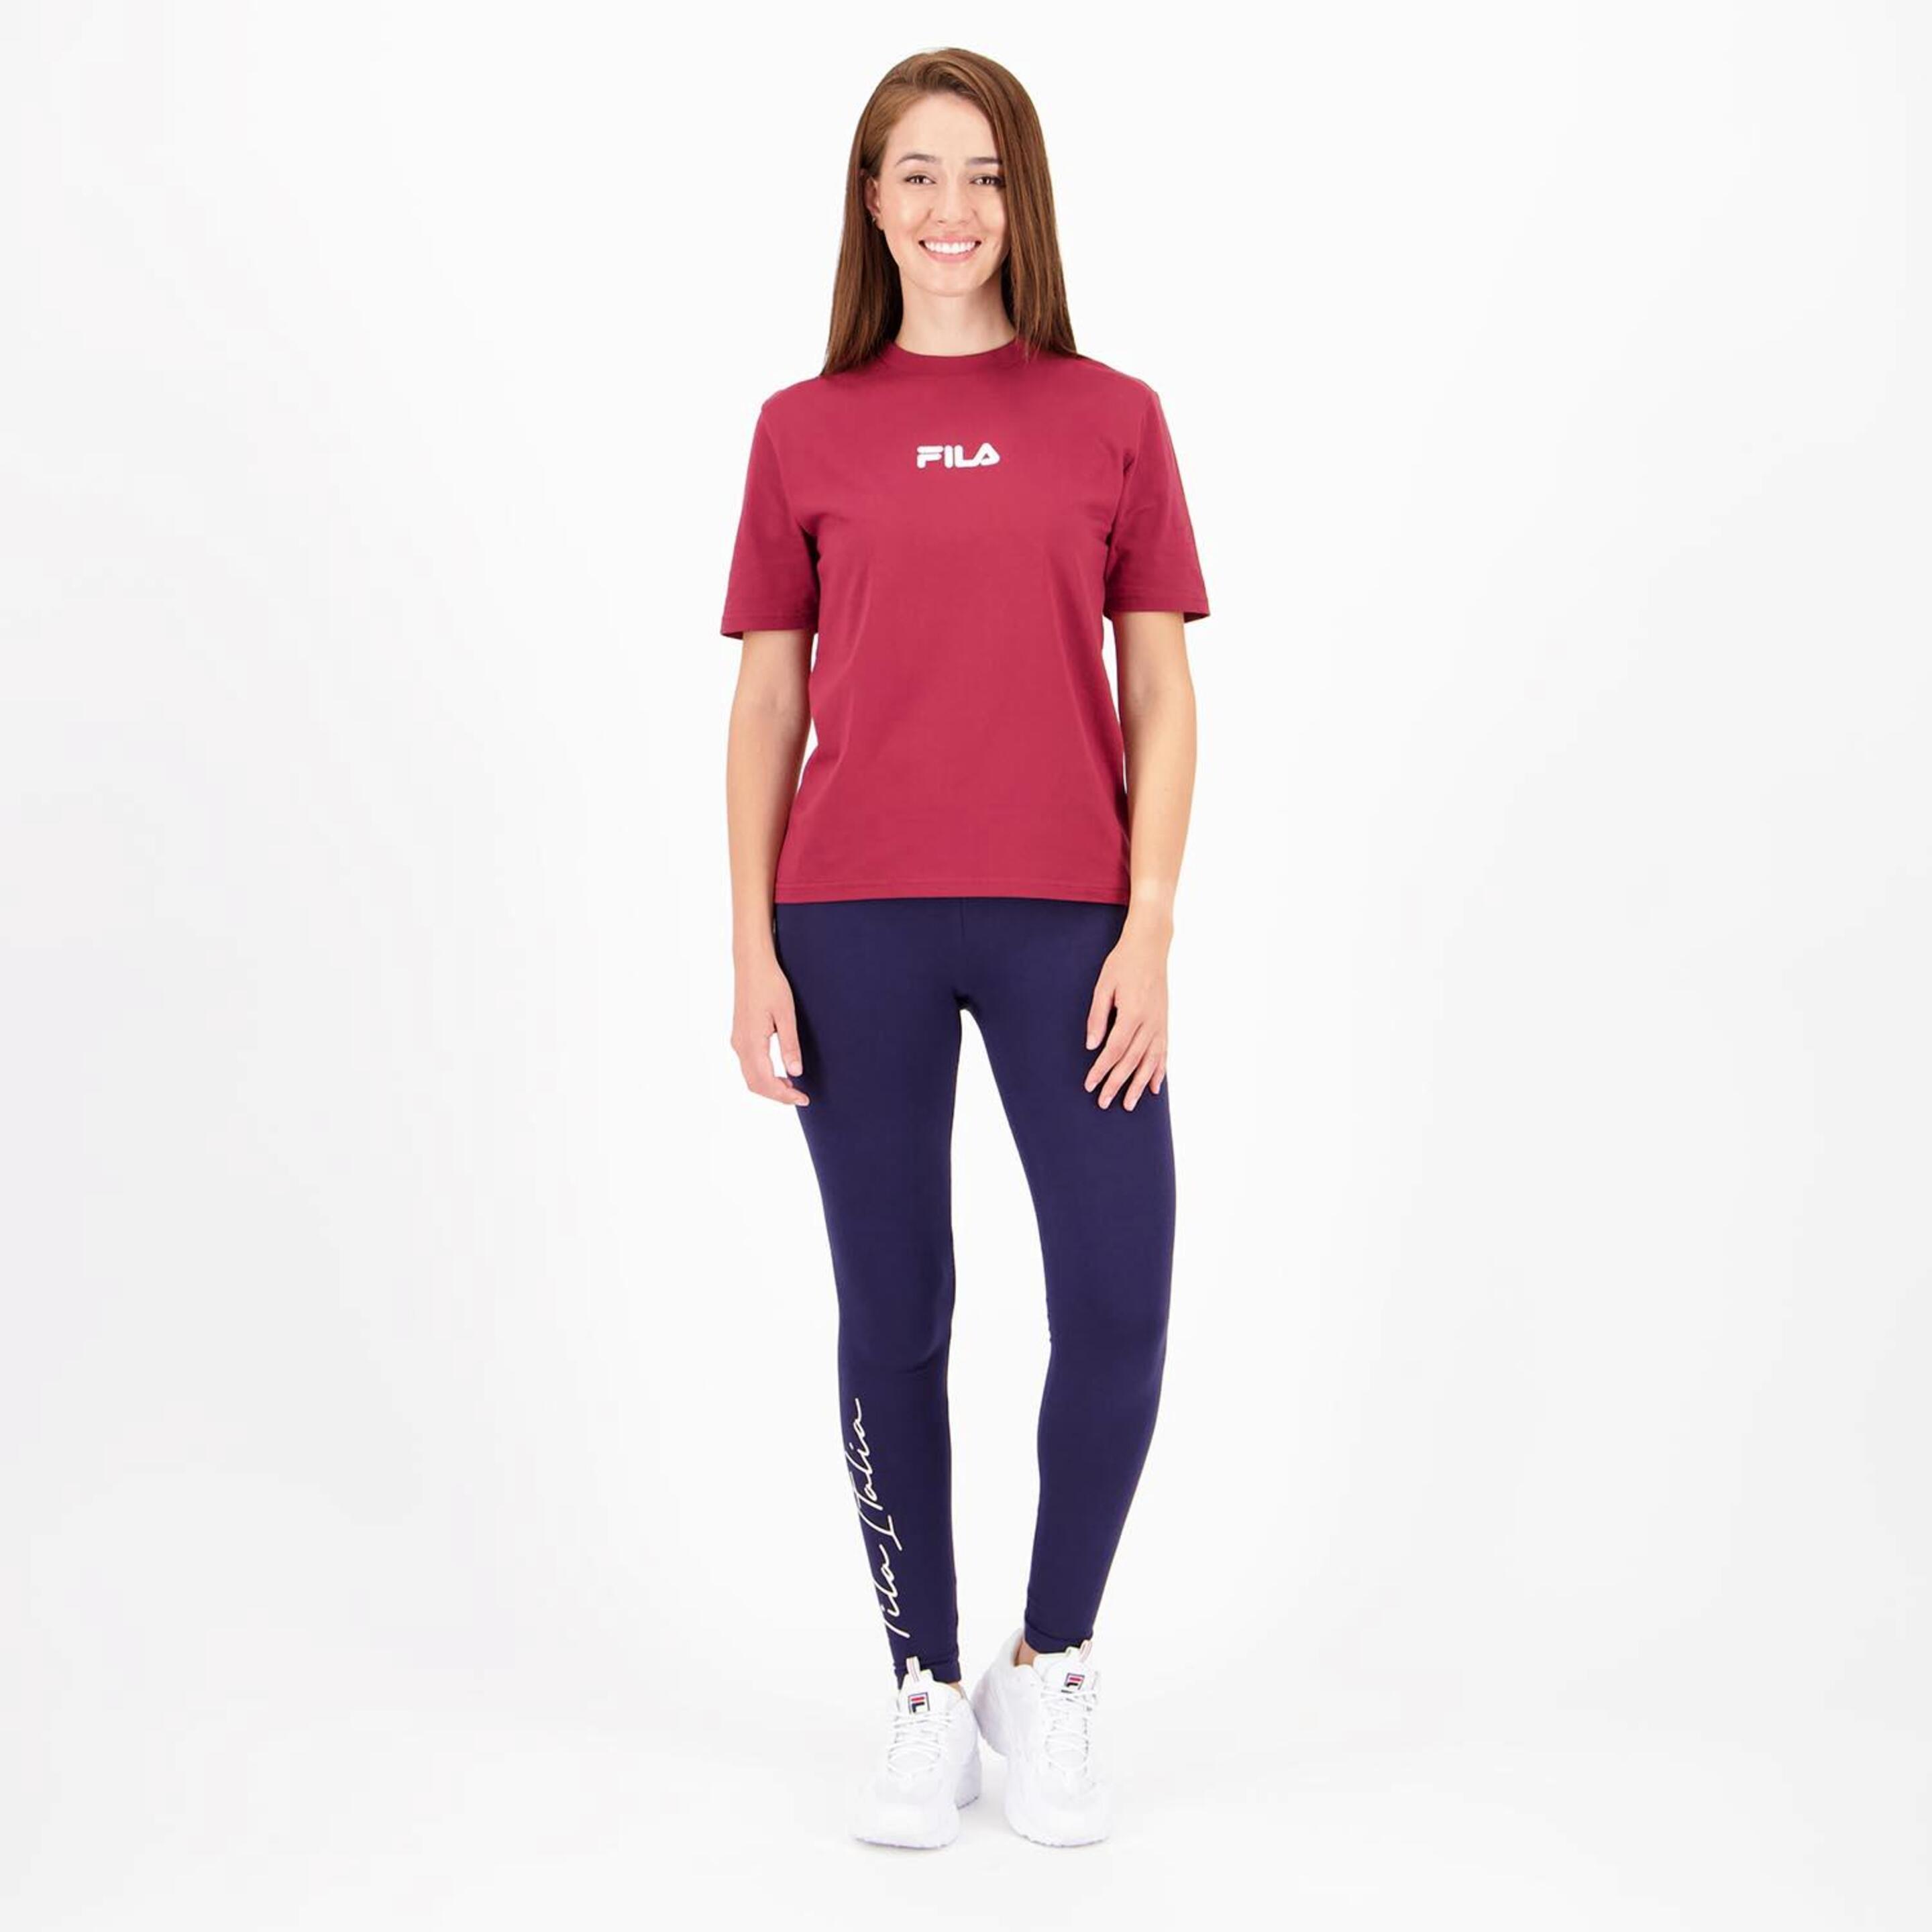 Fila Praise - Vermelho - T-shirt Mulher | Sport Zone